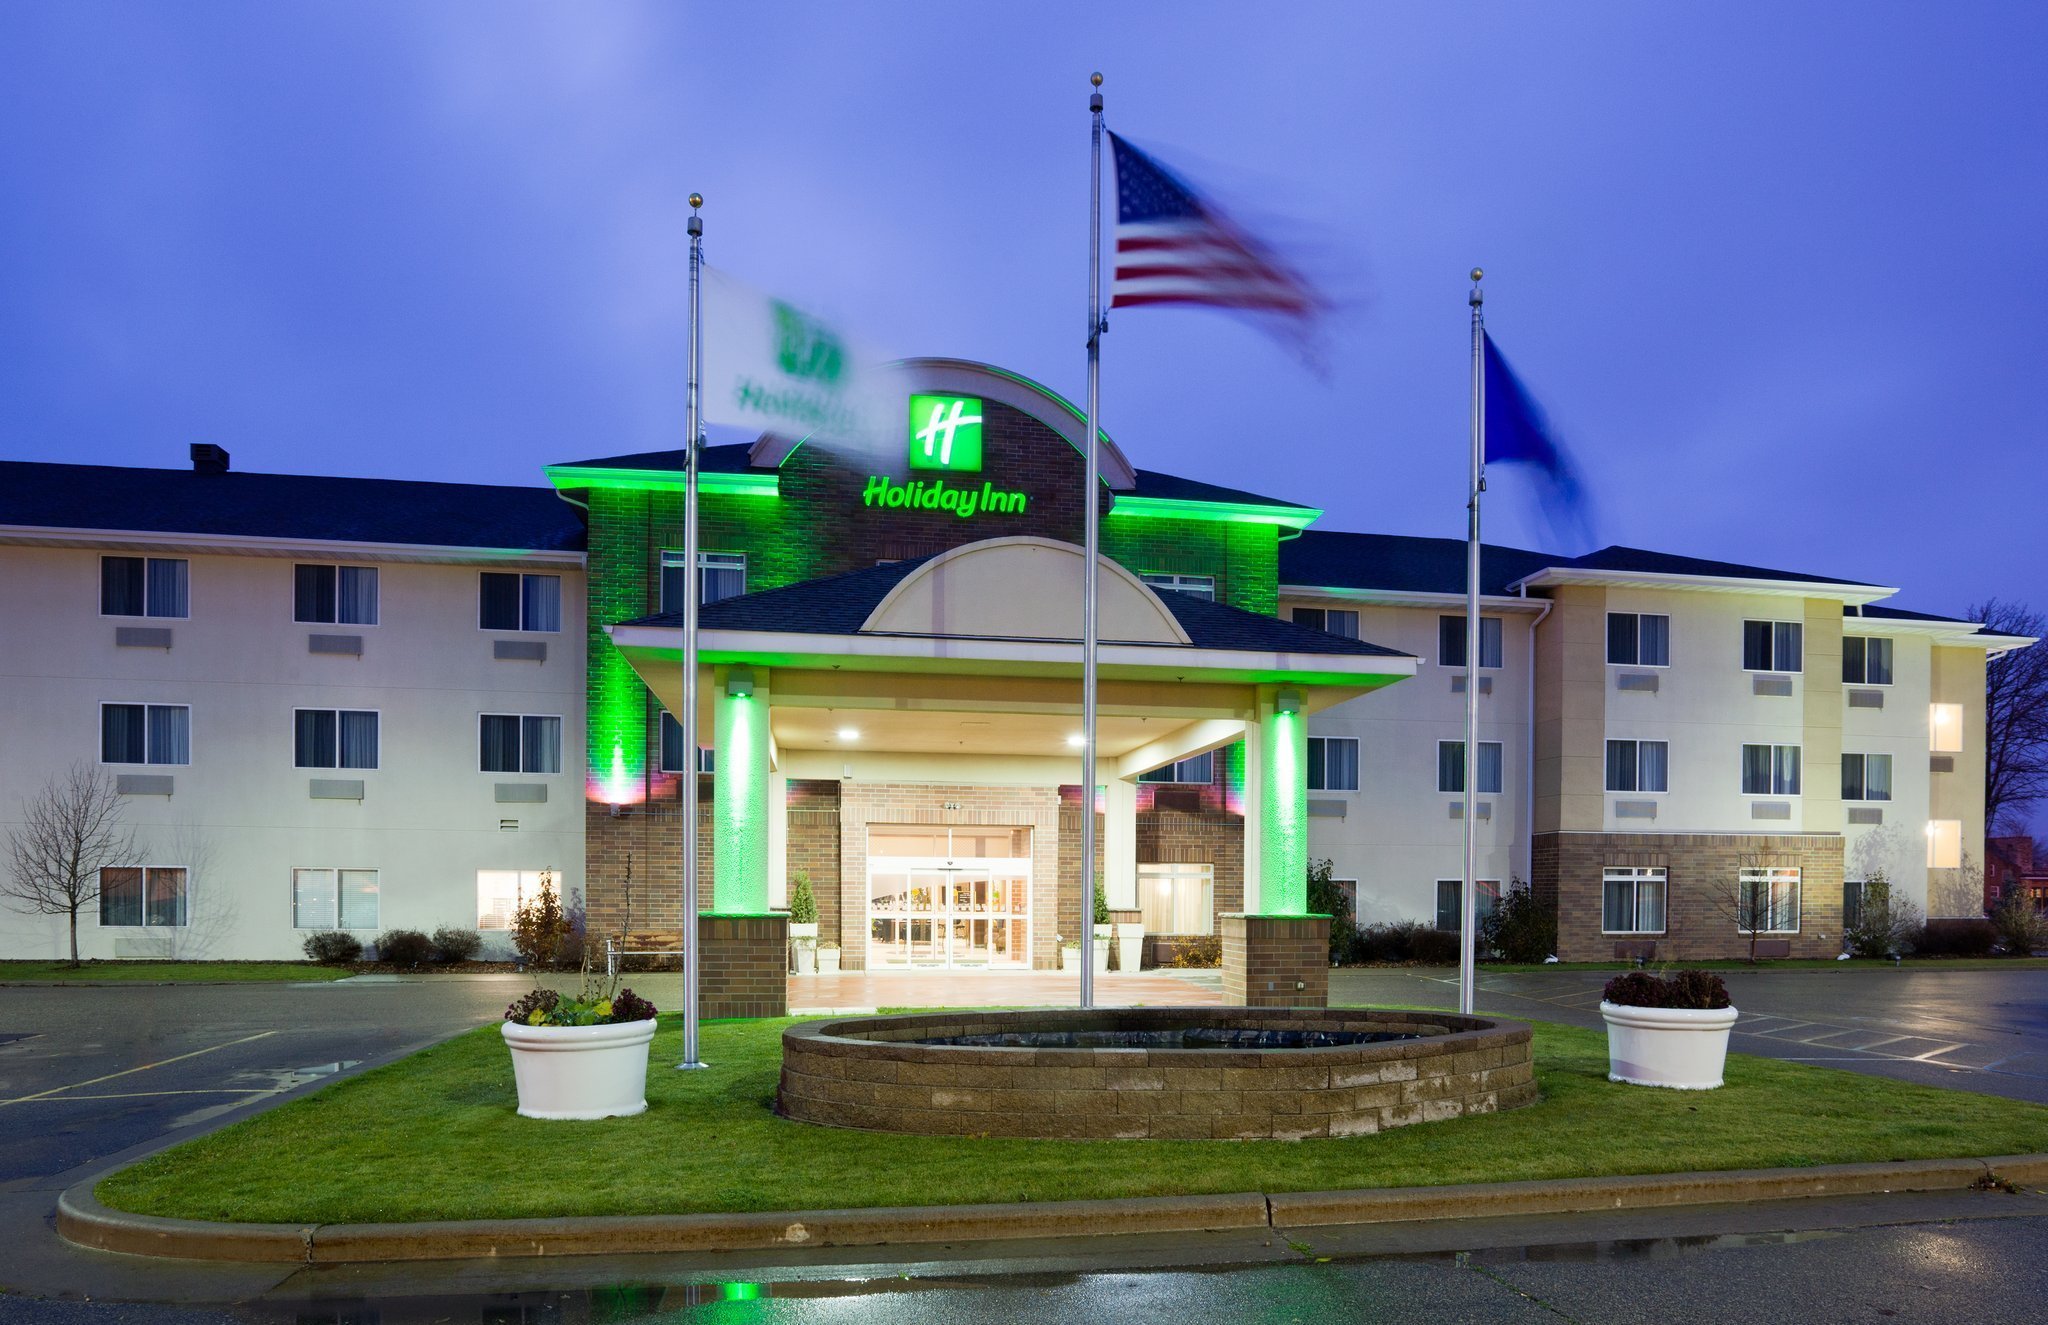 Photo of Holiday Inn Conference Center Marshfield, Marshfield, WI